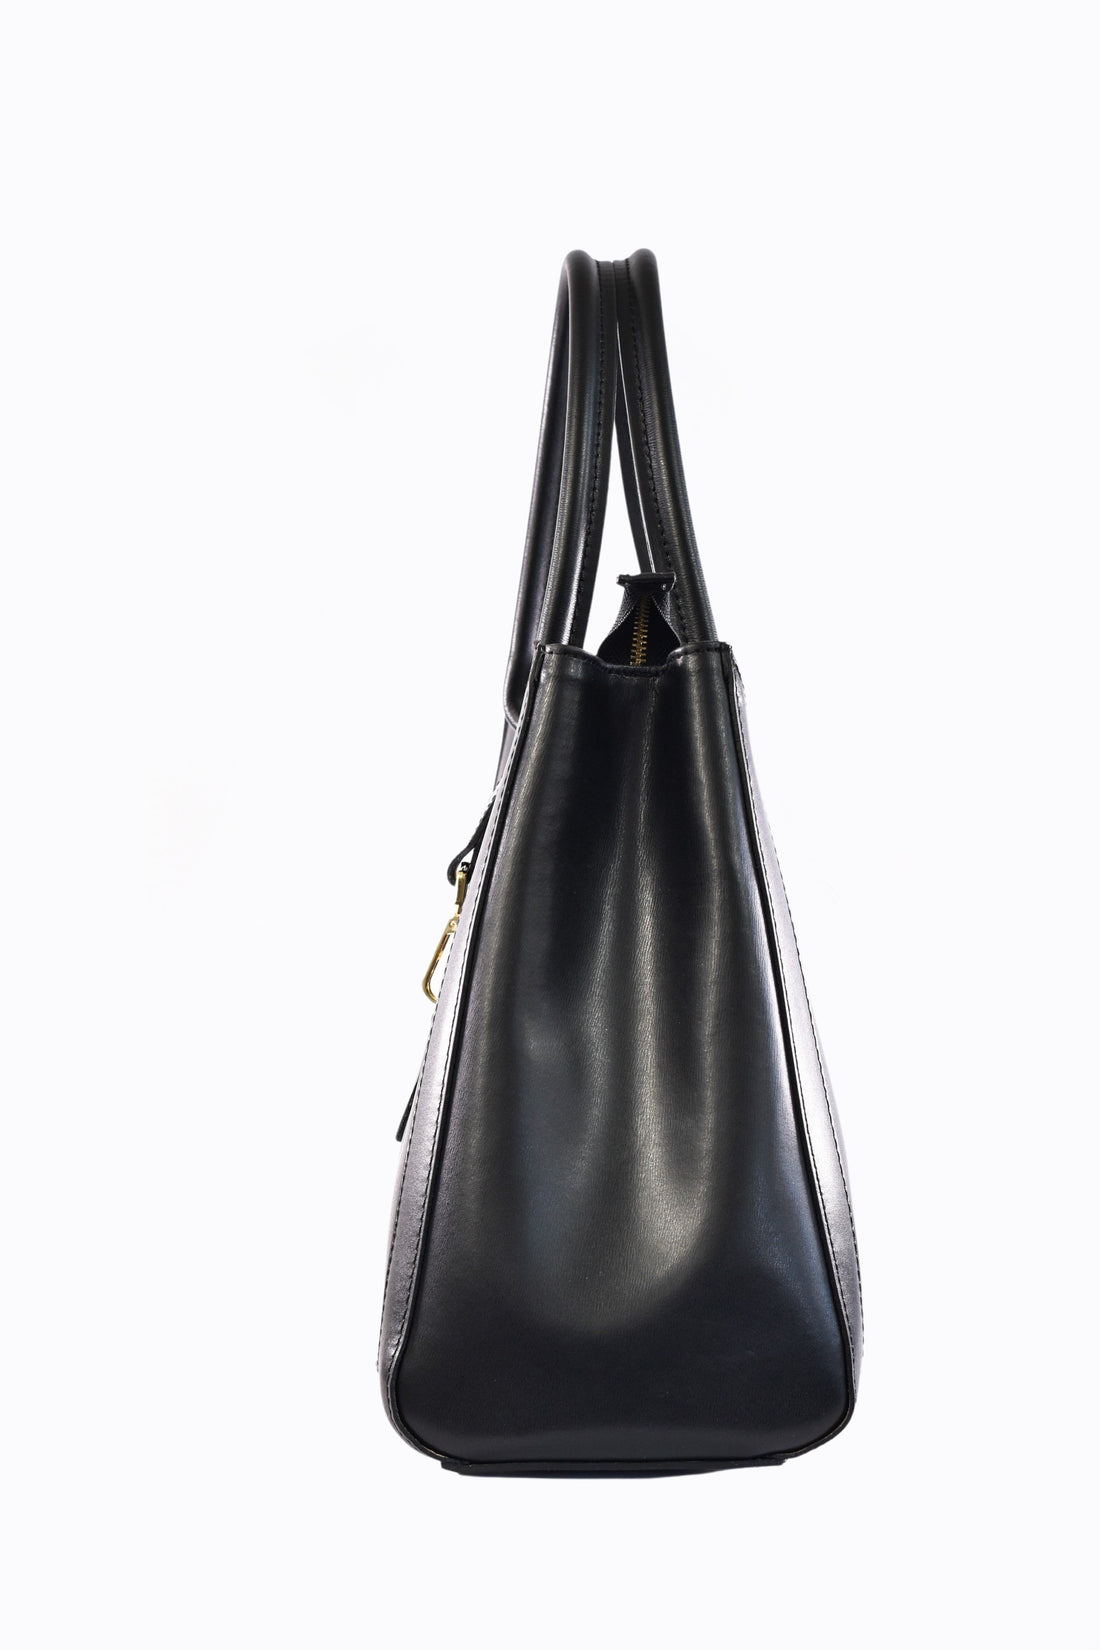 Chloe bag in black brushed leather